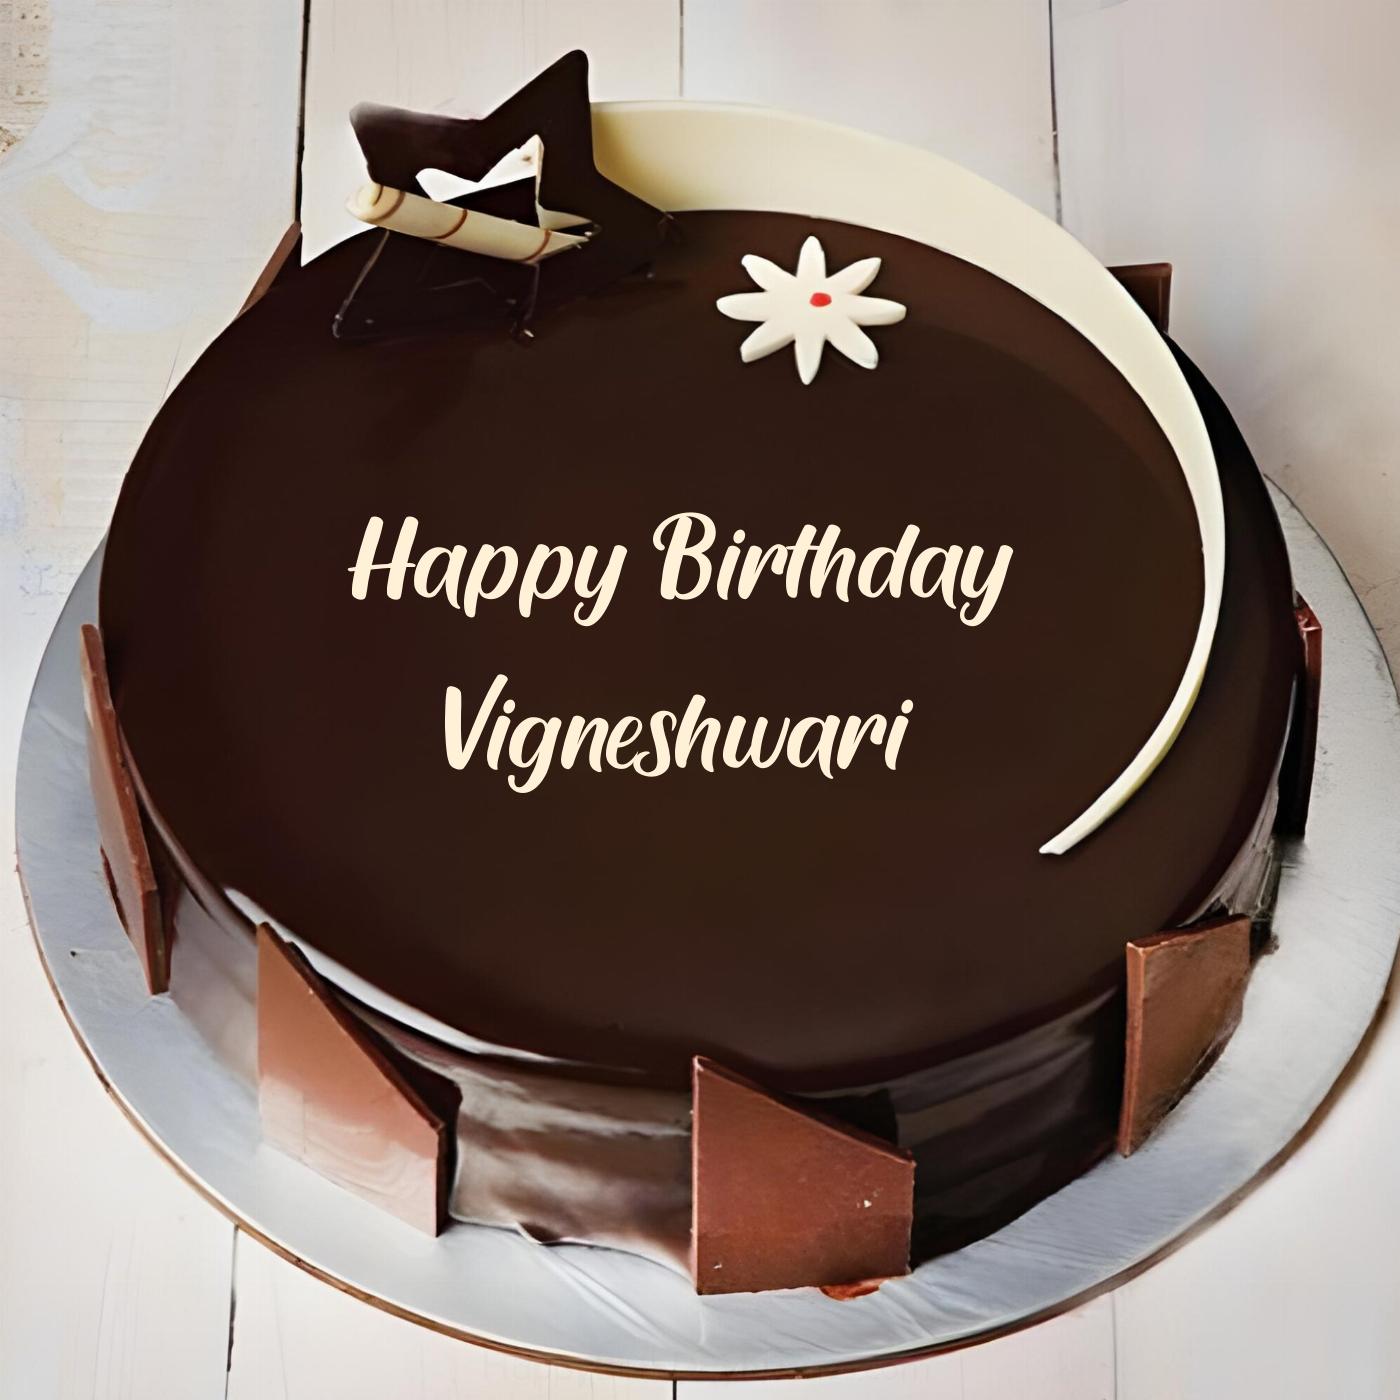 Happy Birthday Vigneshwari Chocolate Star Cake